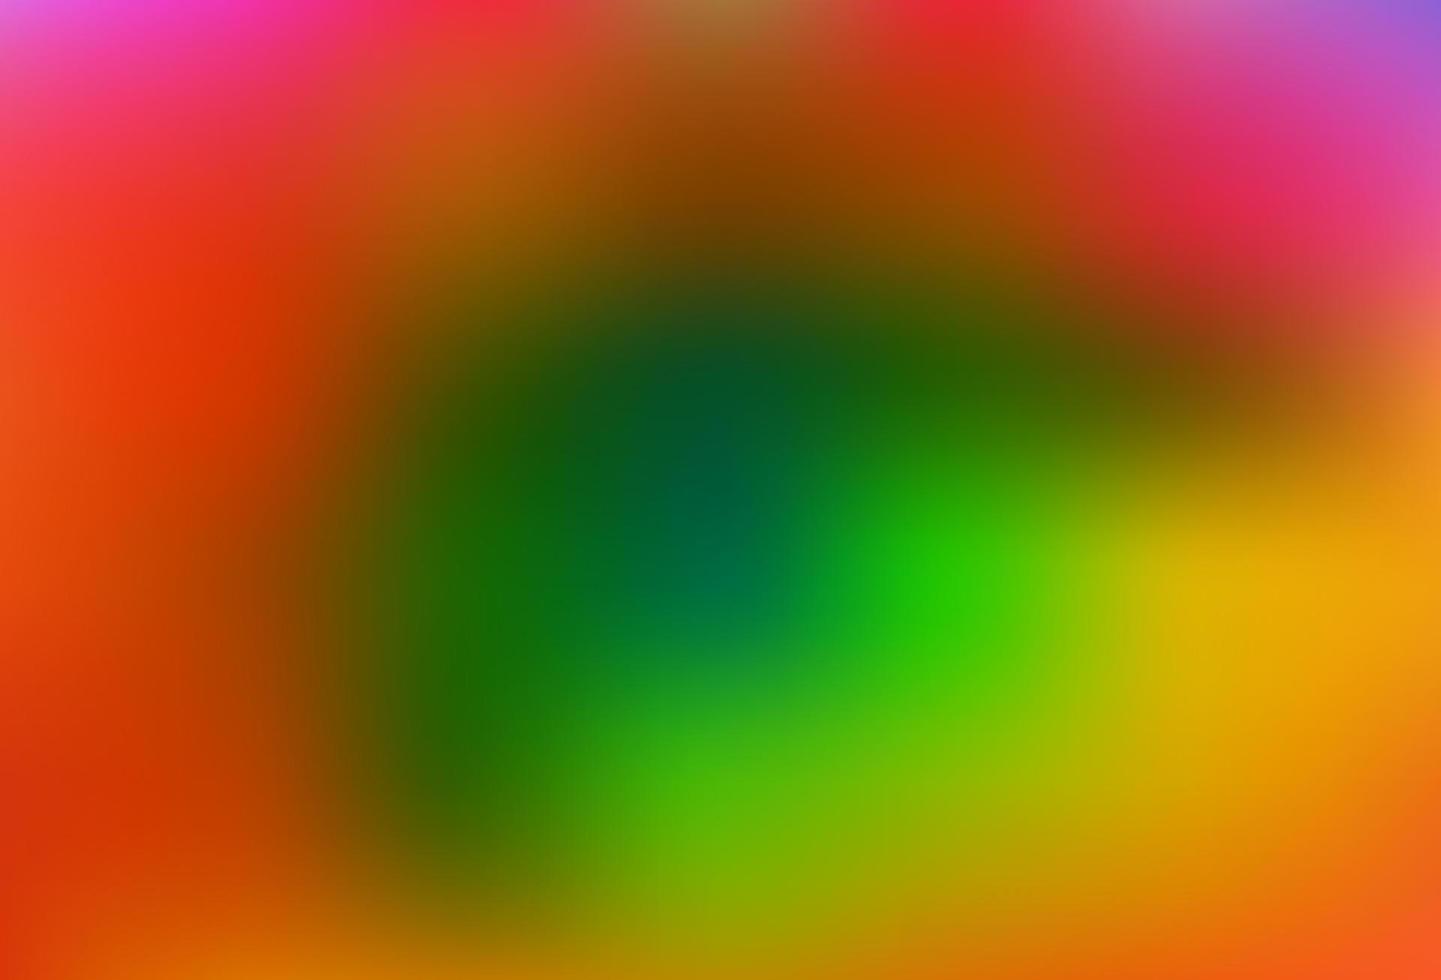 luz multicolorido, fundo abstrato brilhante de vetor de arco-íris.